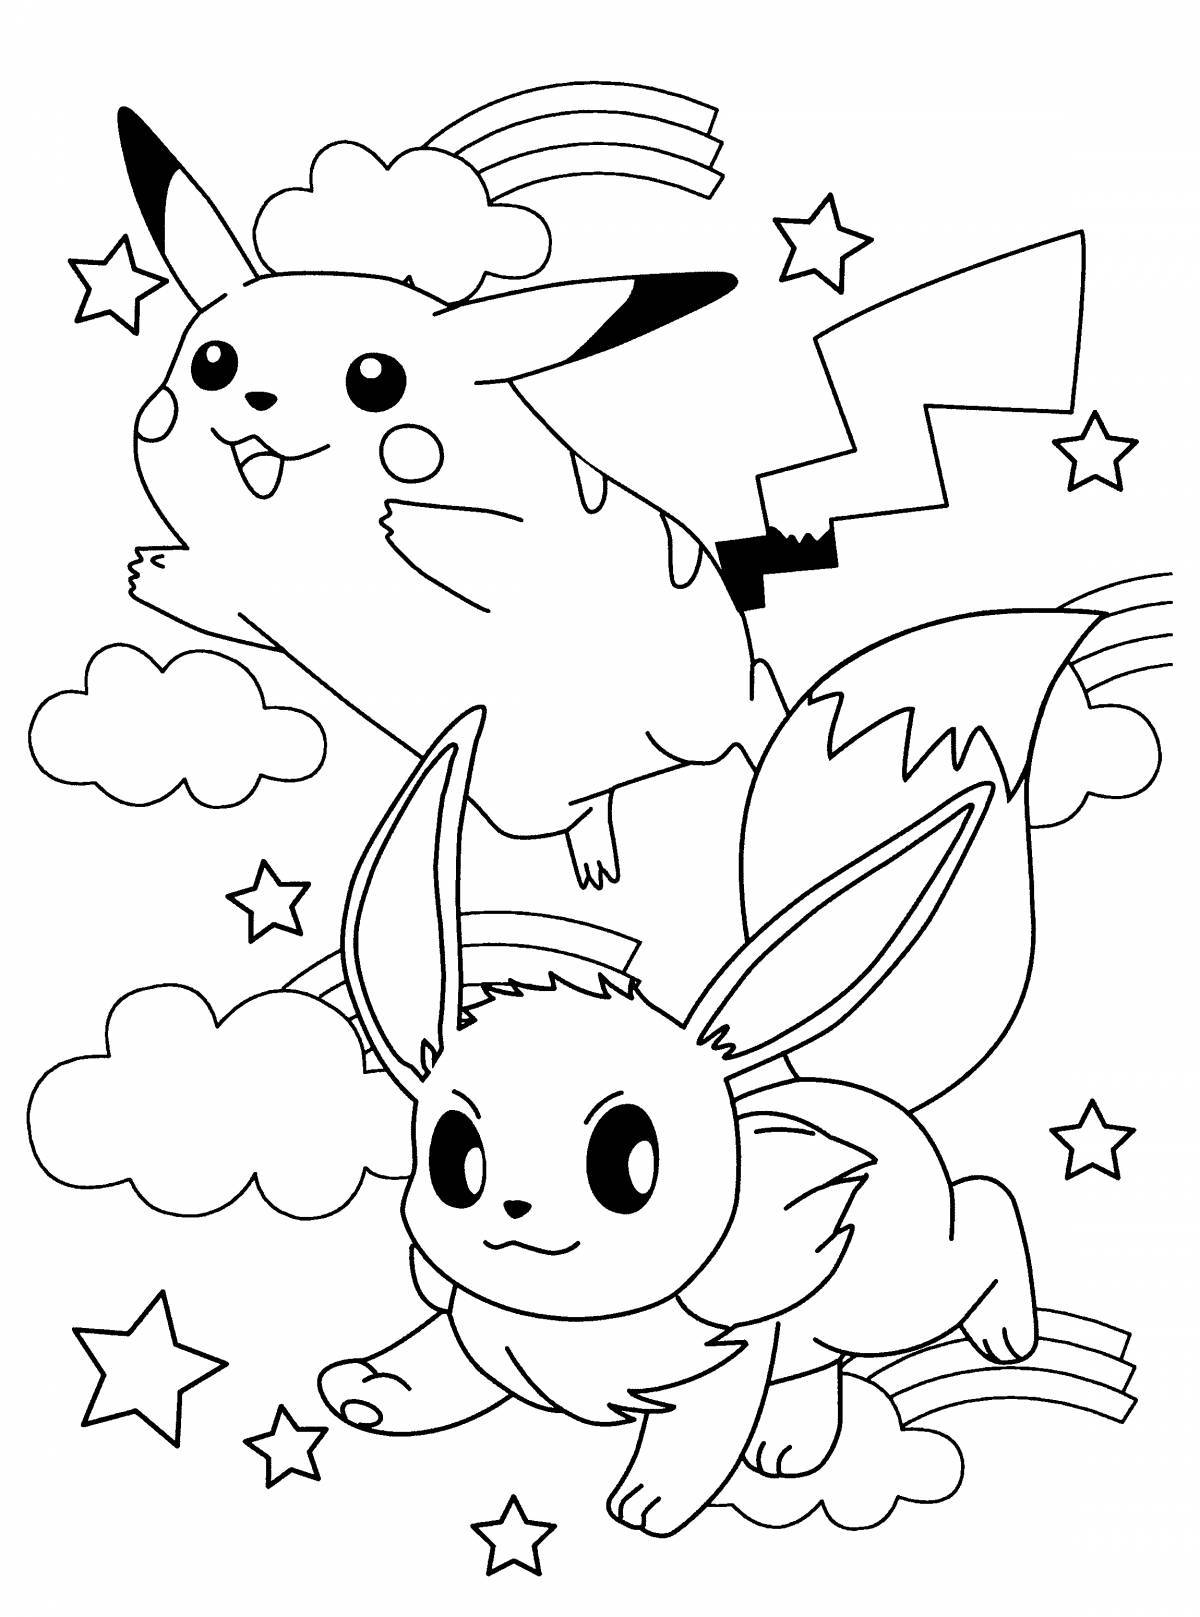 Fun coloring pikachu for kids